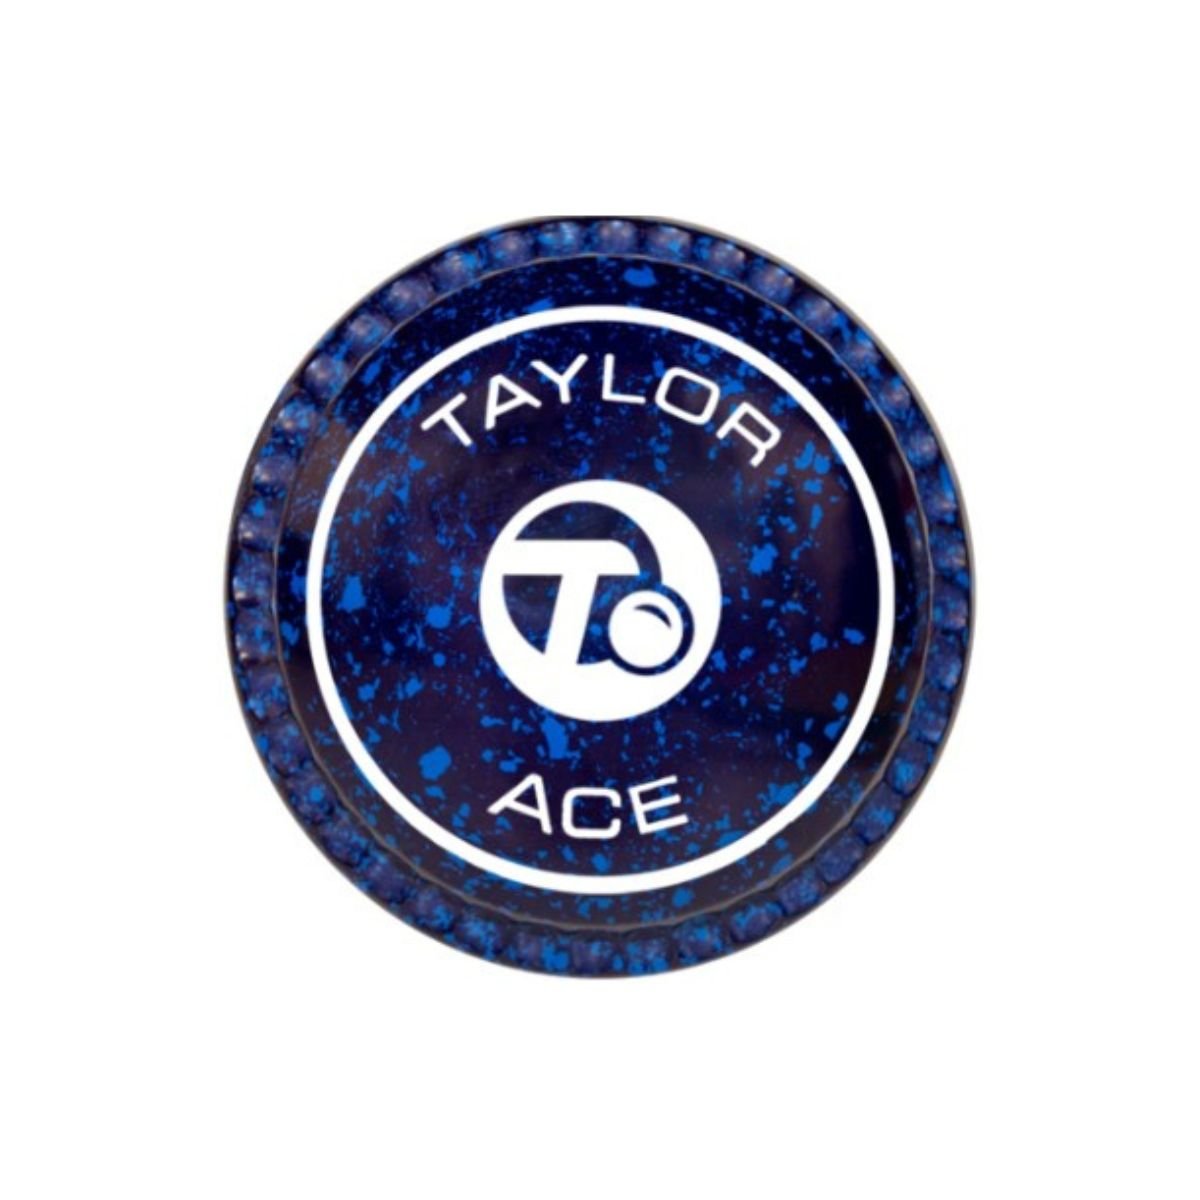 Taylor ace xtreme grip coloured bowls - 2